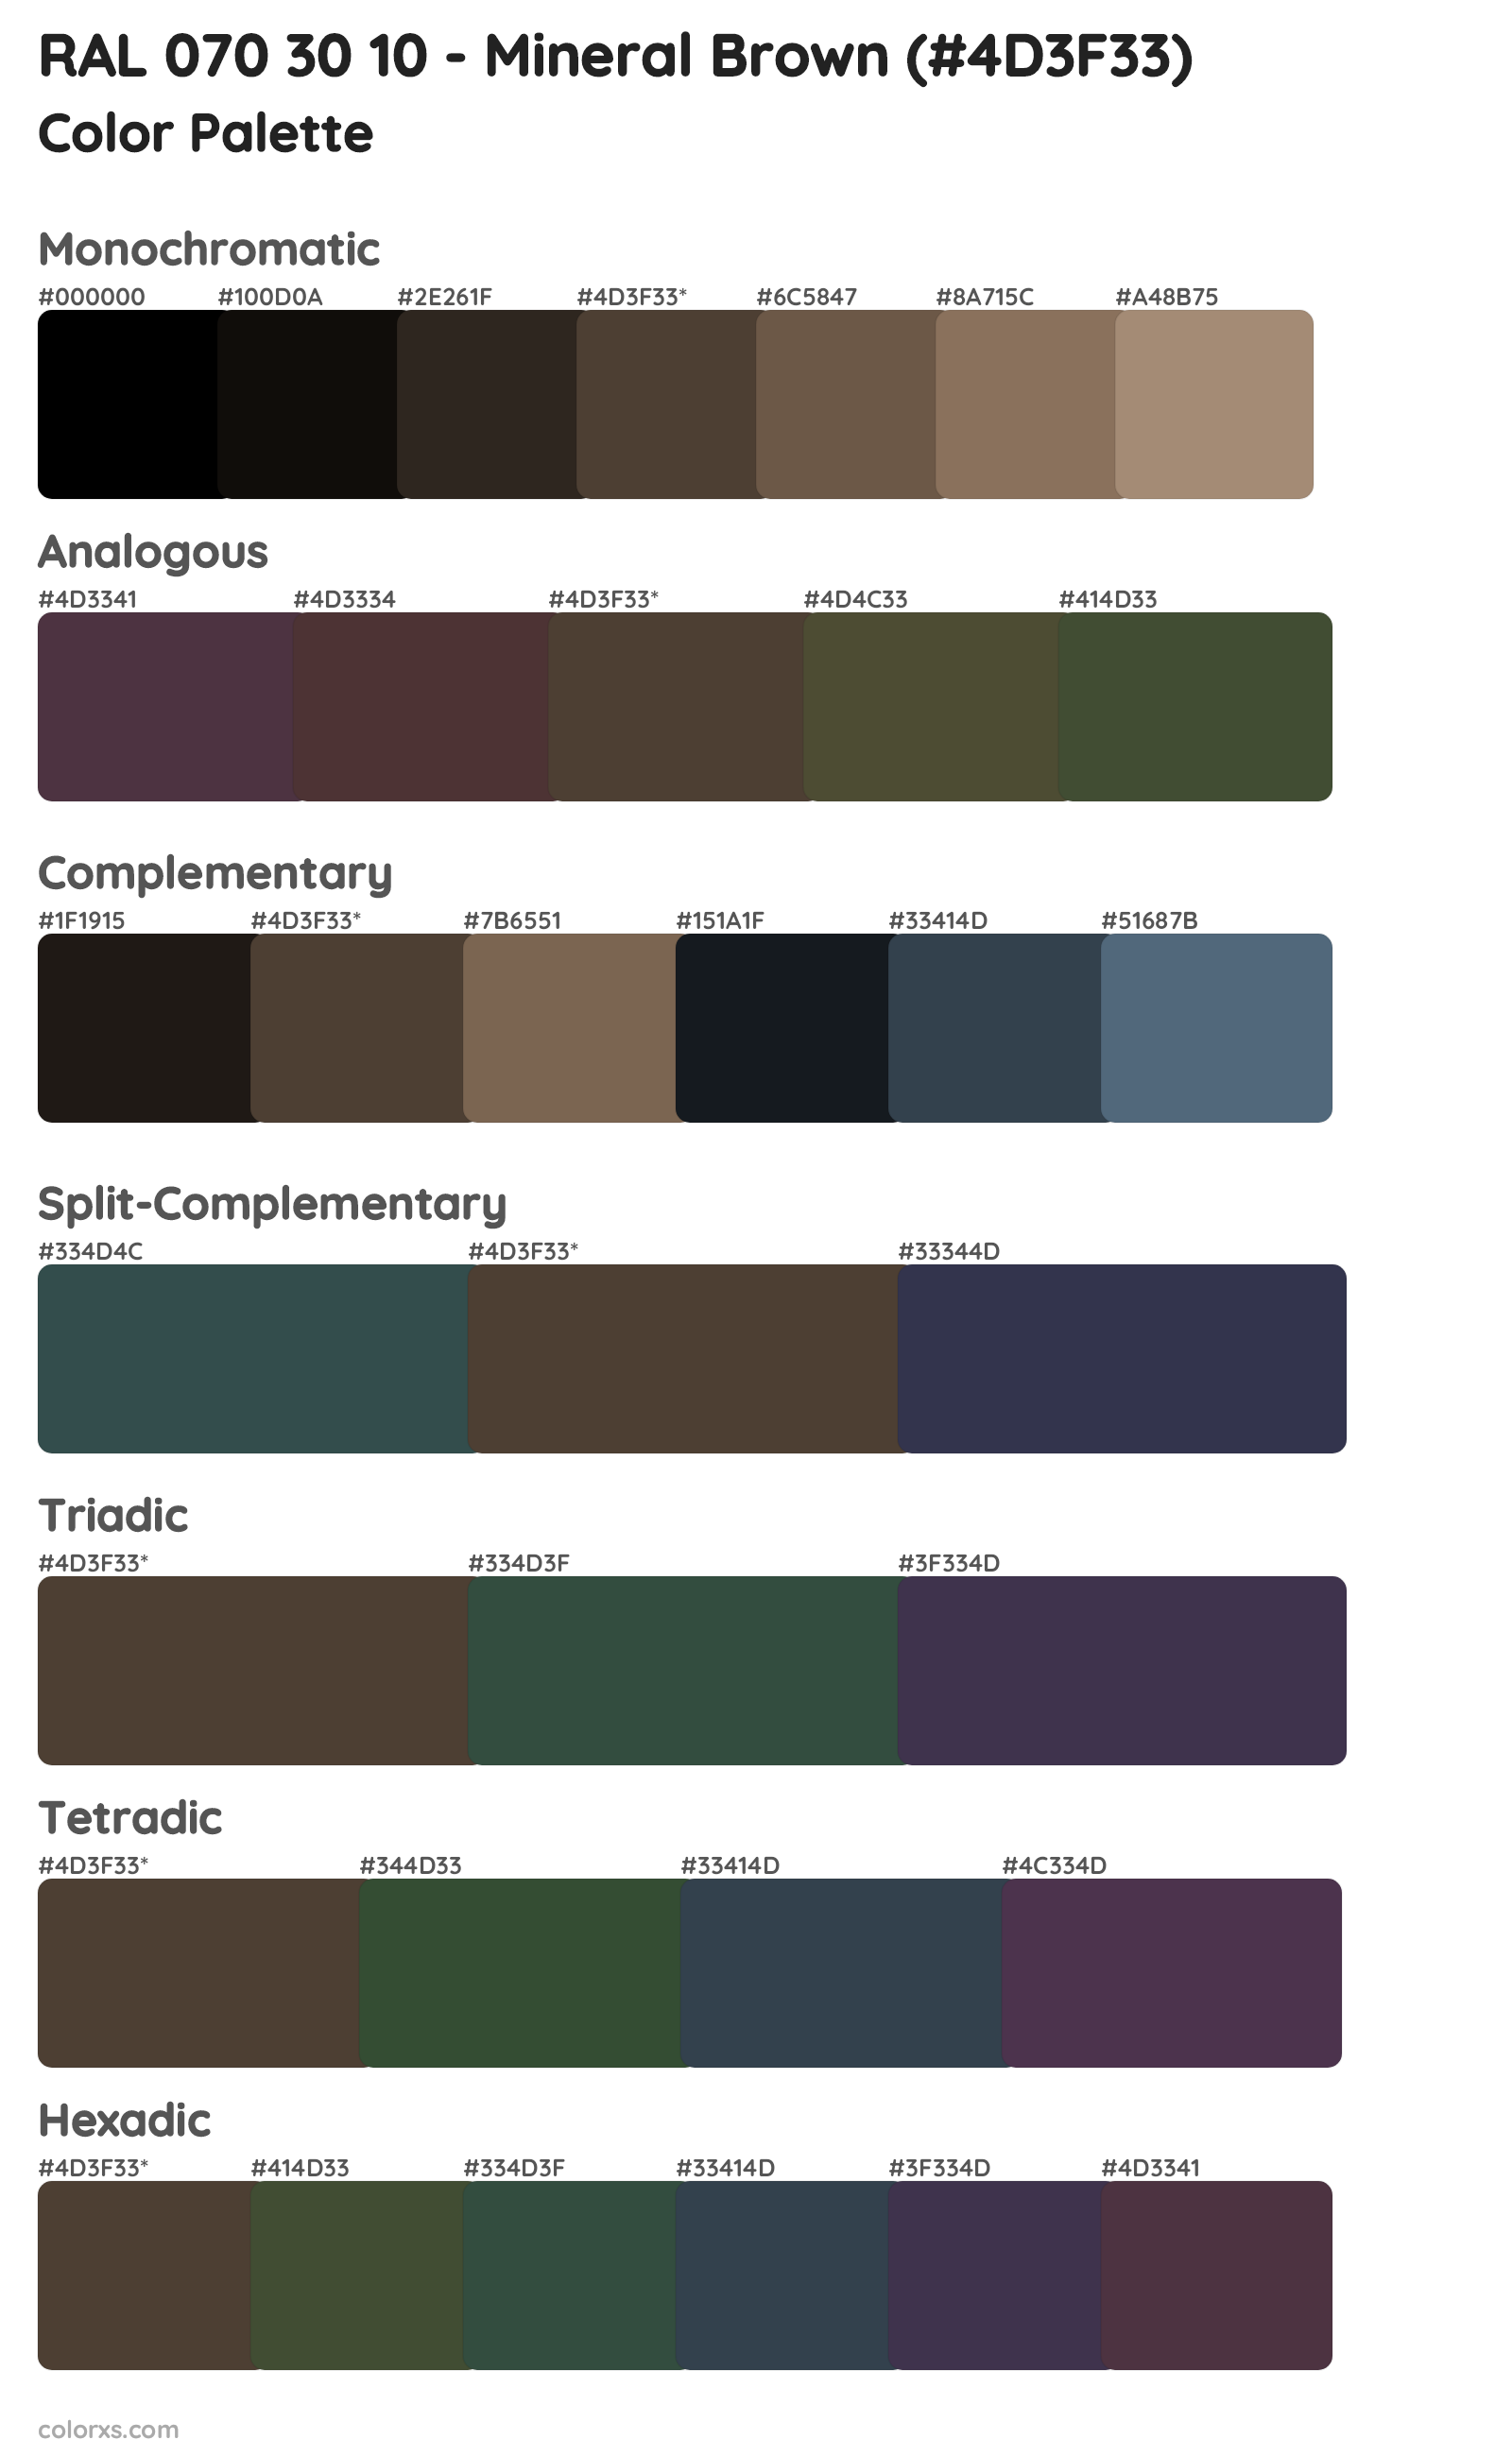 RAL 070 30 10 - Mineral Brown Color Scheme Palettes